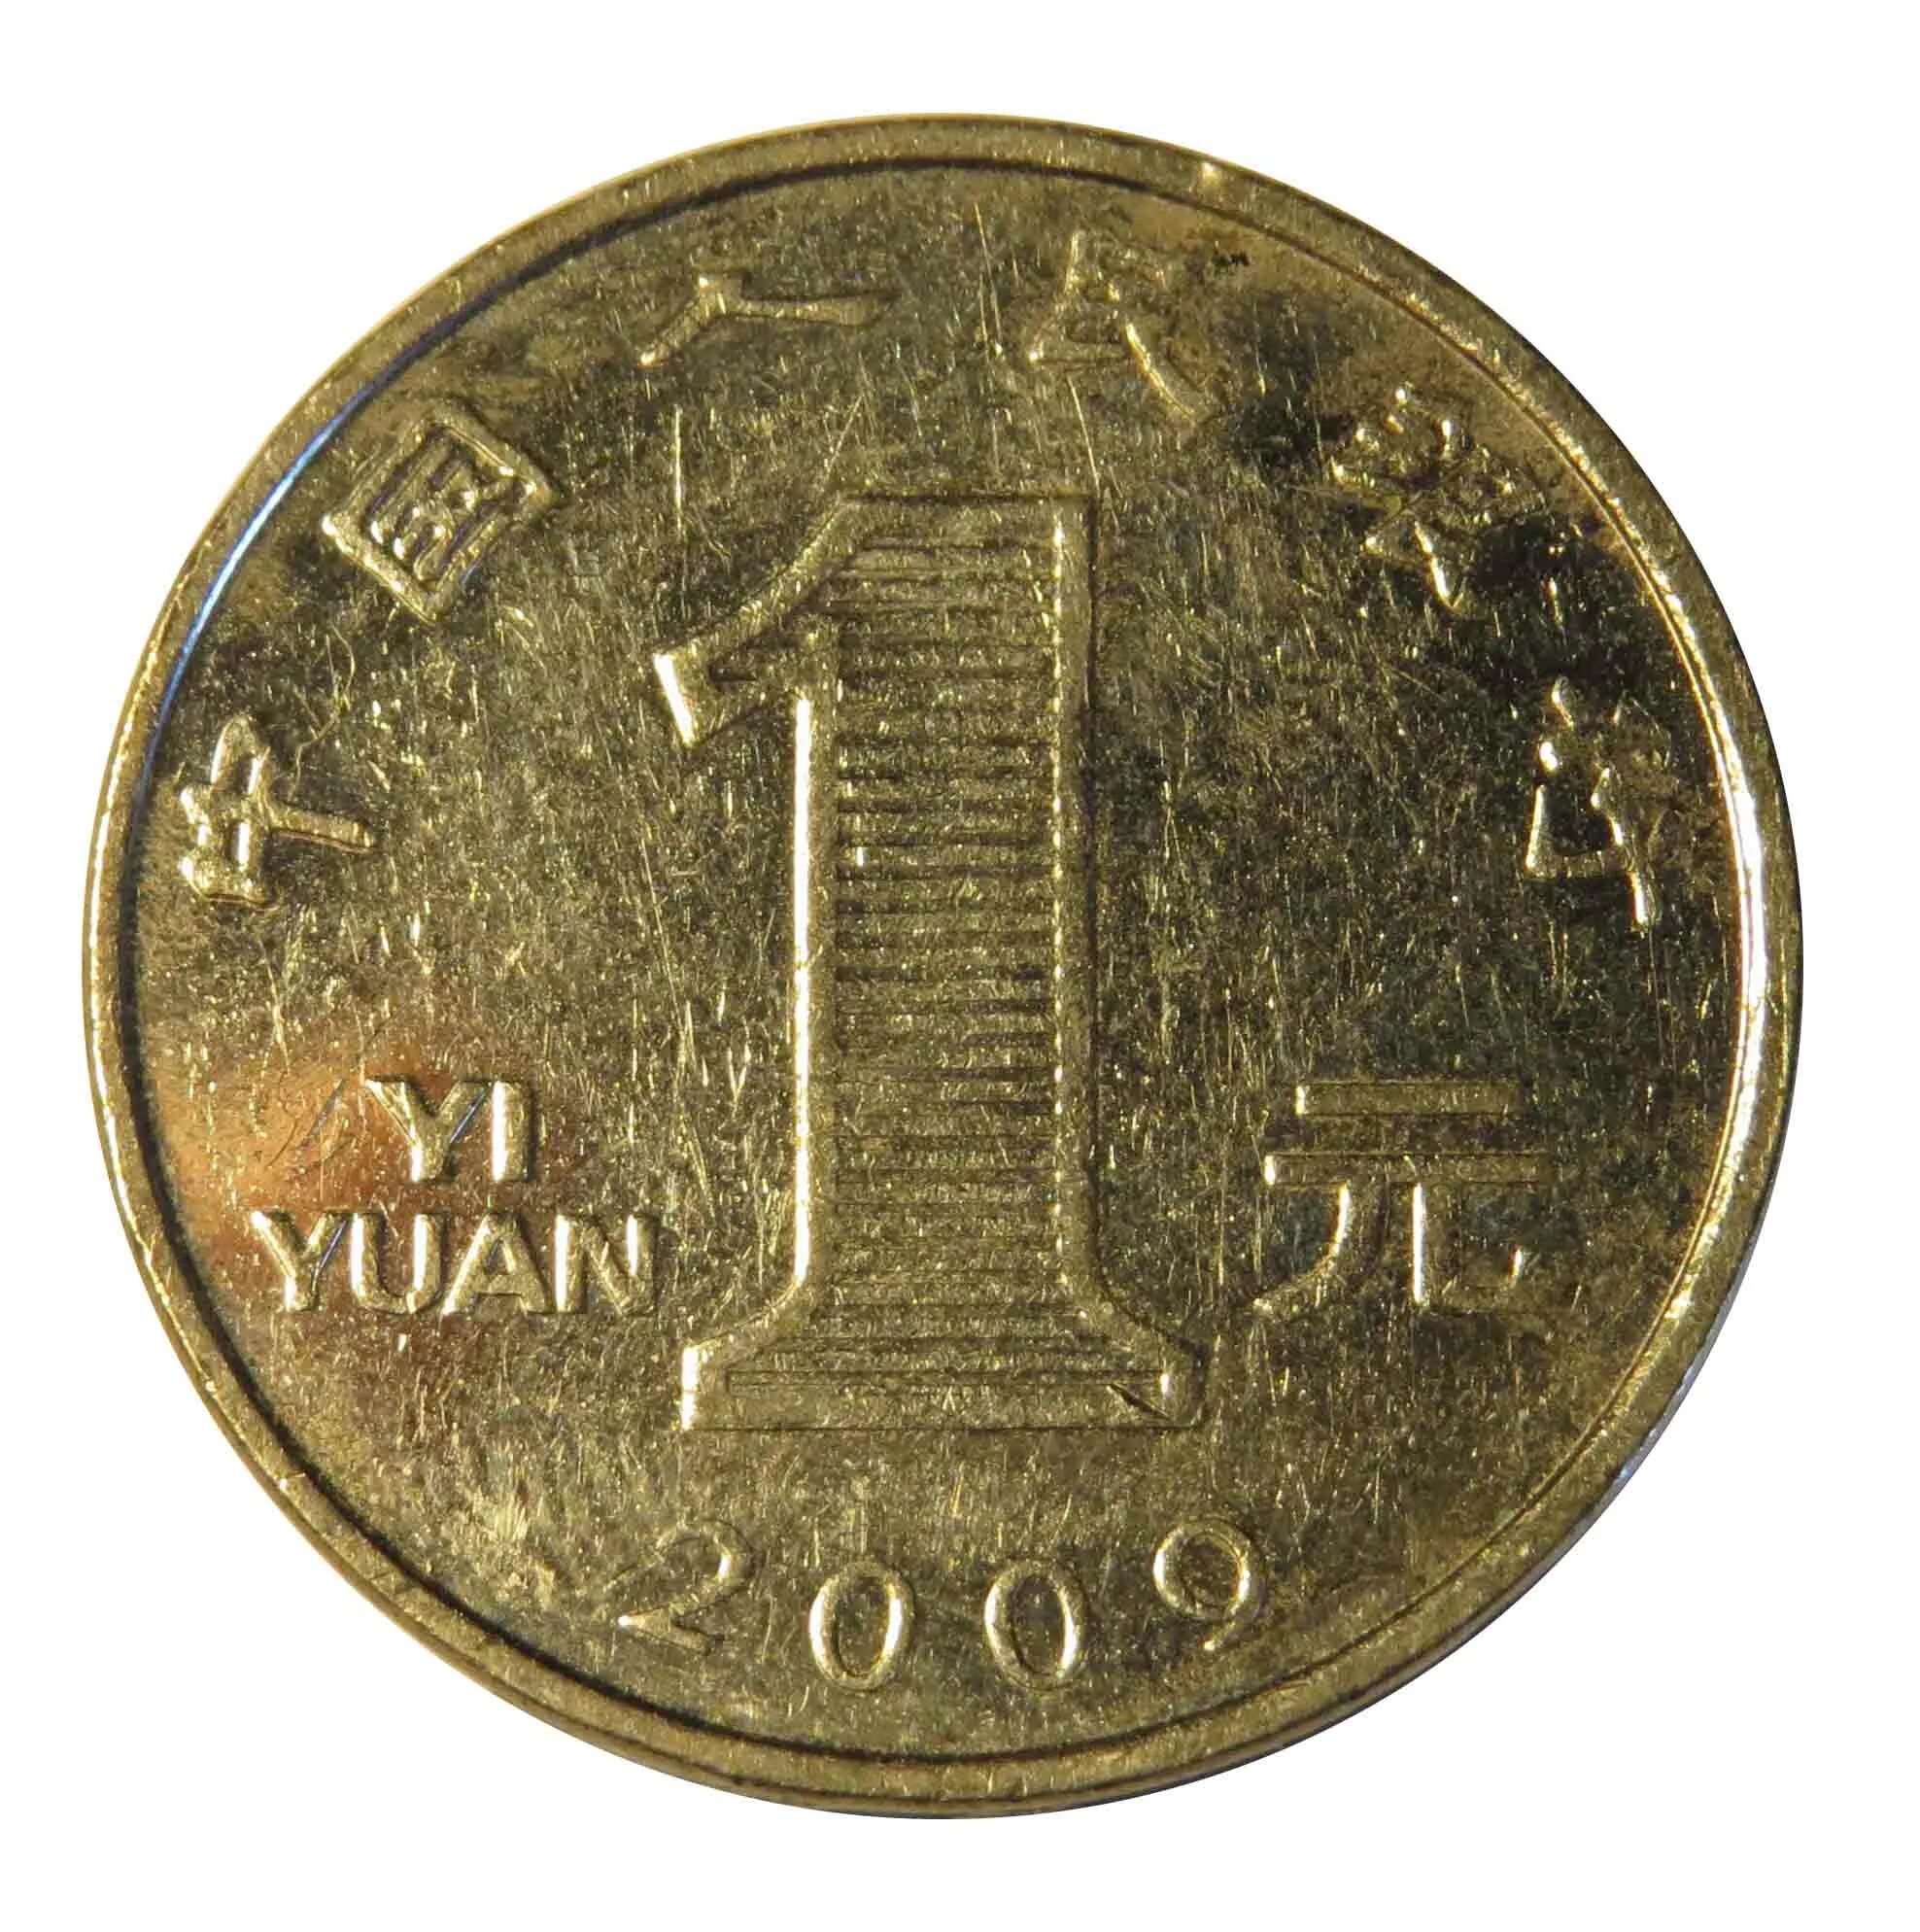 Китайский юань монеты. 1 Китайский юань. Zhongguo Renmin Yinhang монета. Монета 1 yi Yuan 2009. Китай 1 юань.